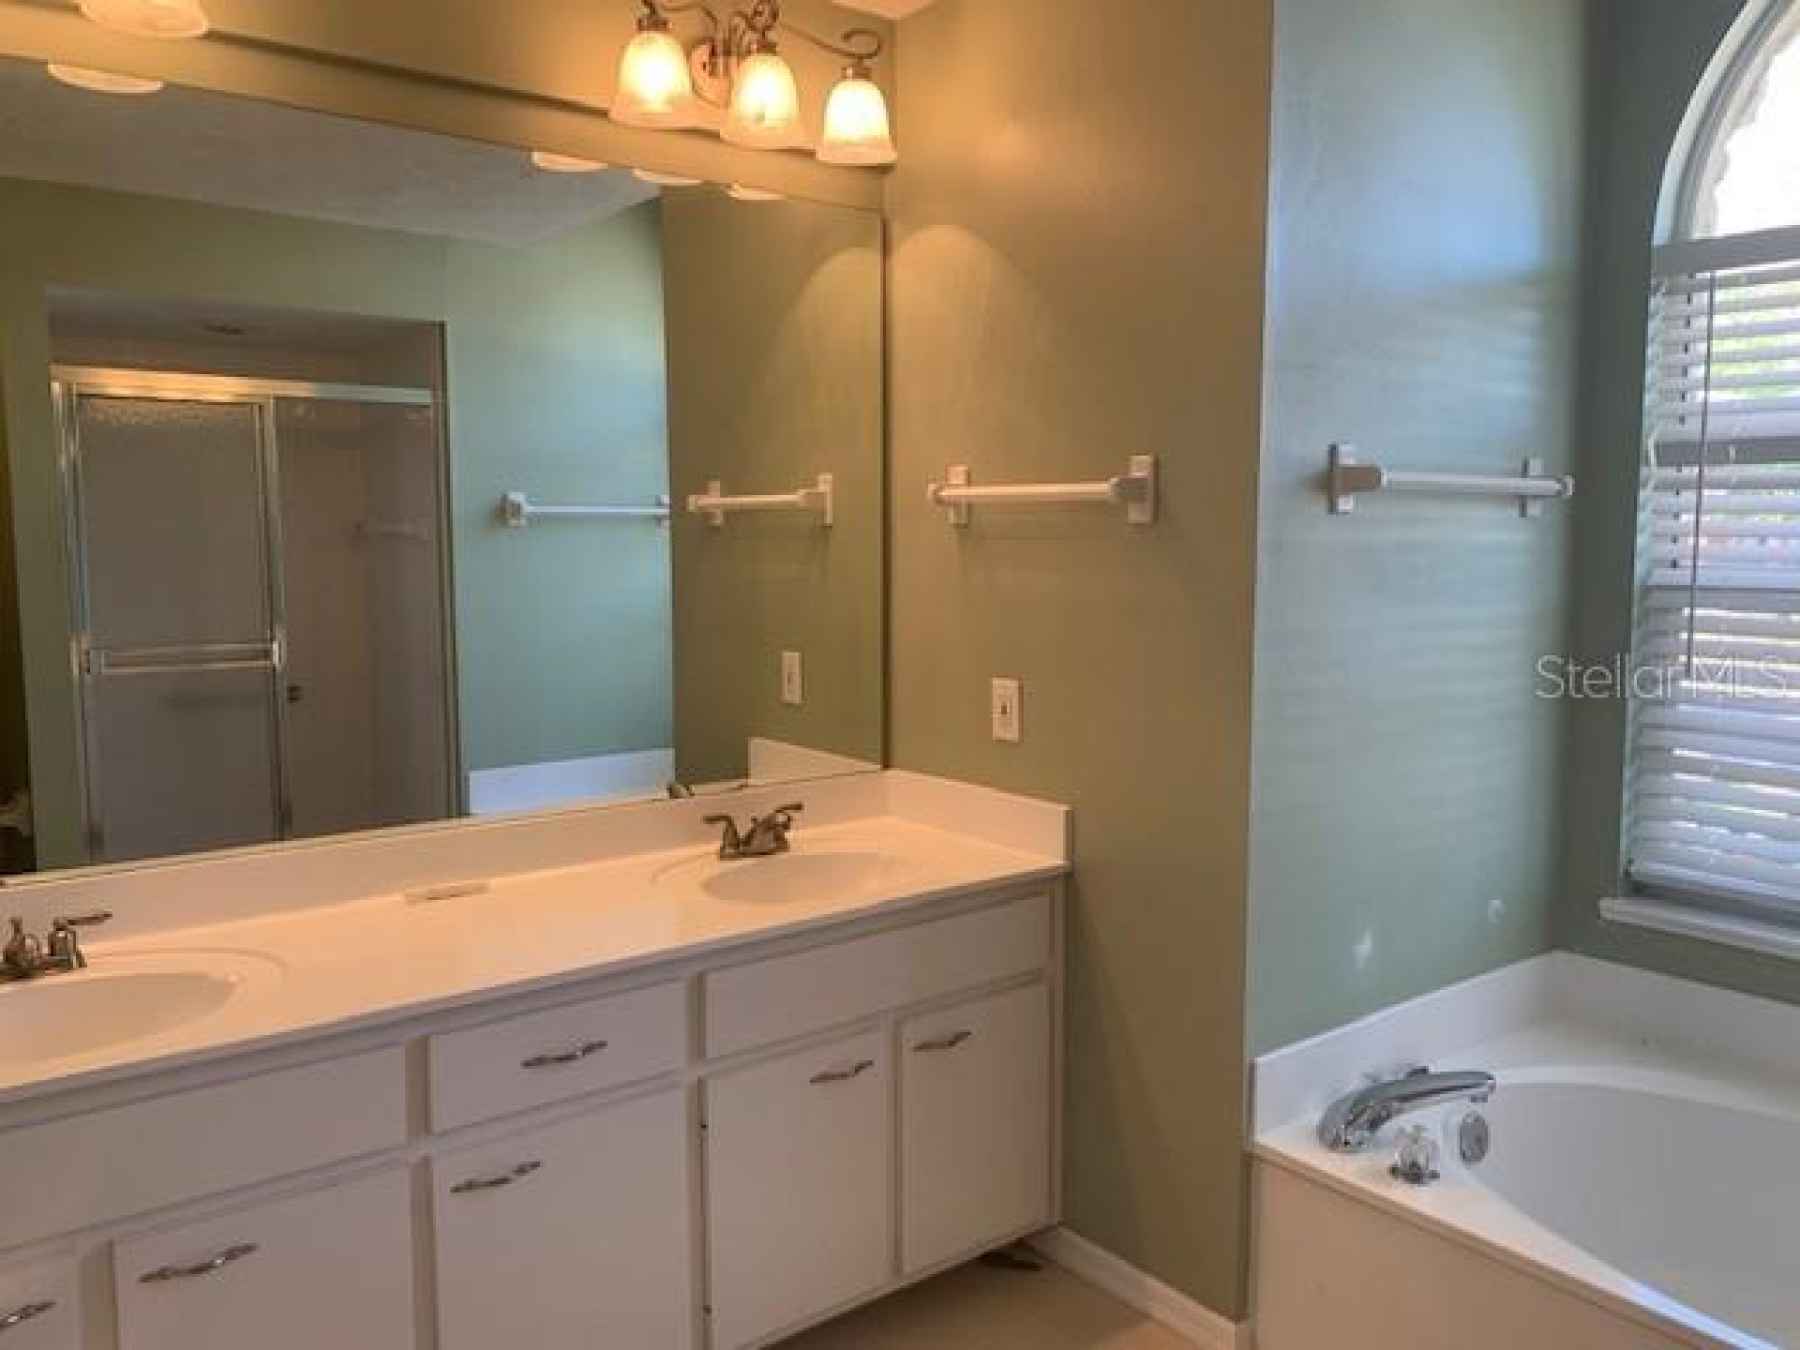 Master bathroom. Shower stall behind camera.